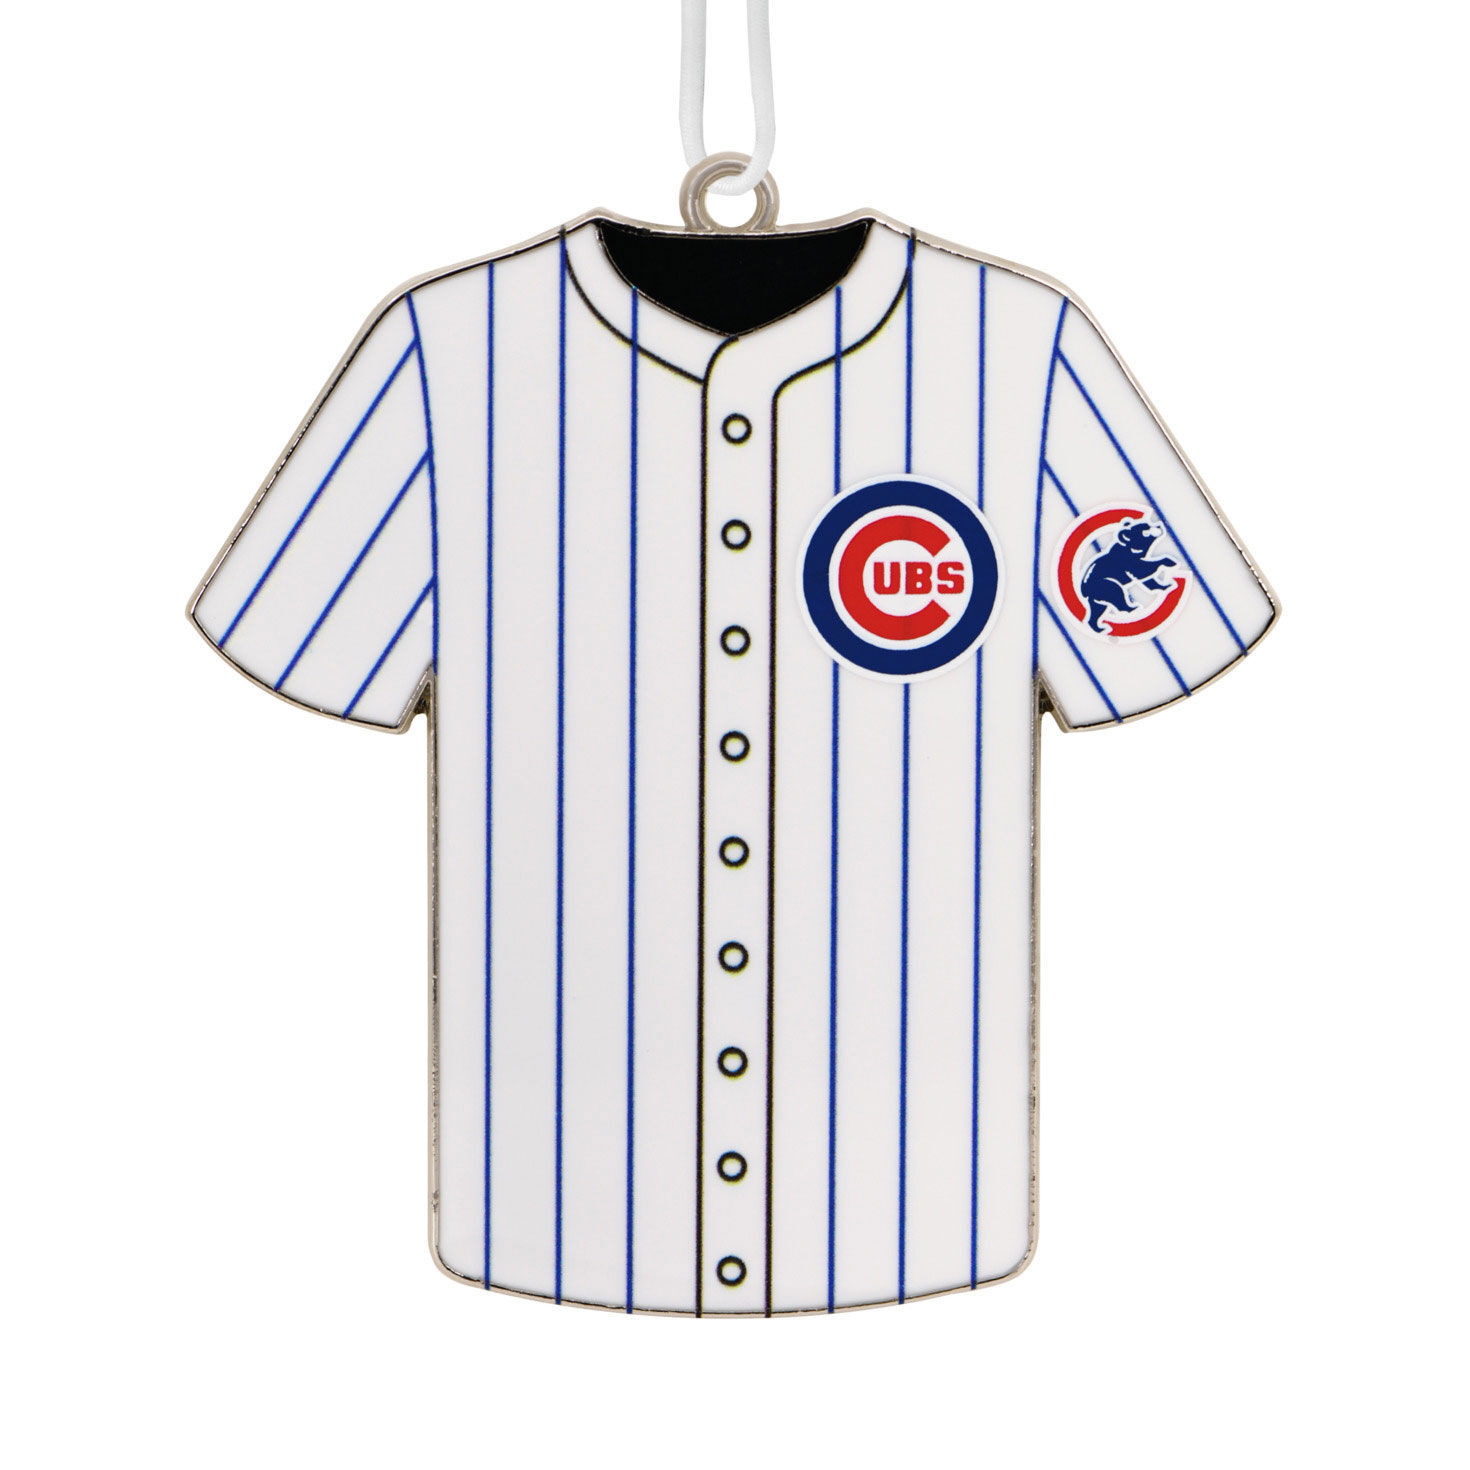 chicago baseball jersey